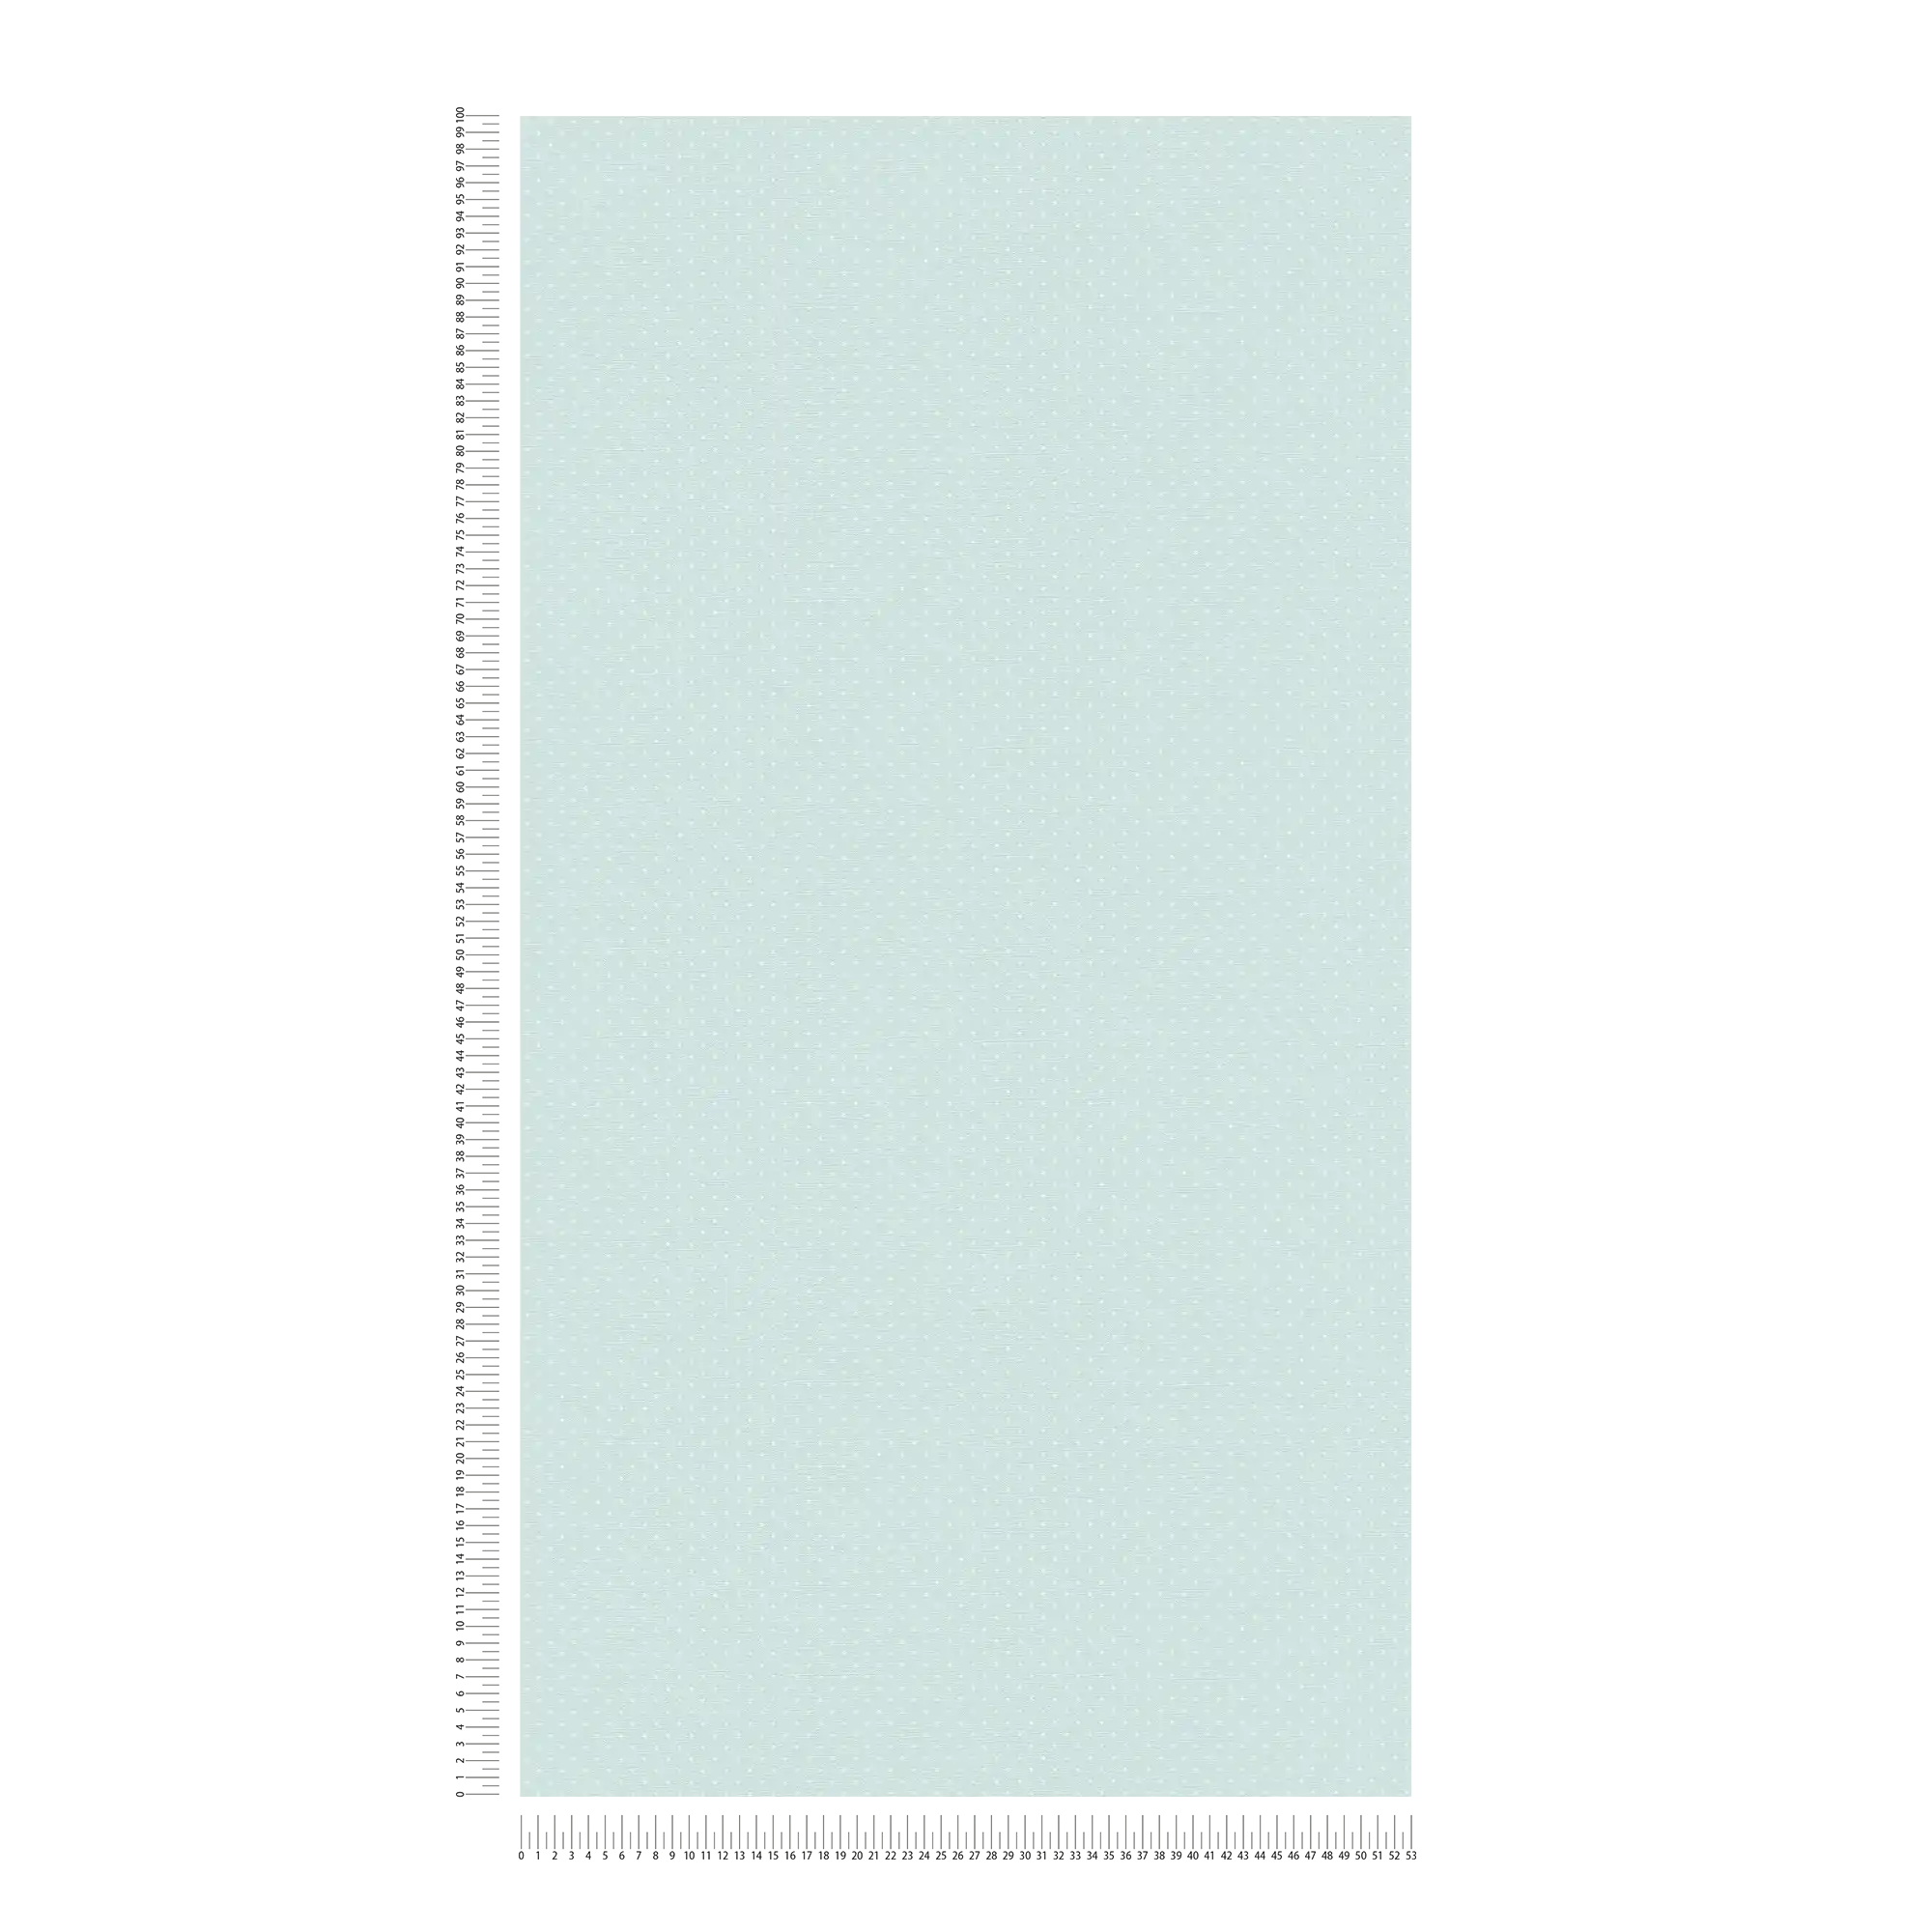             Vliesbehang met klein stippenpatroon - lichtblauw, wit
        